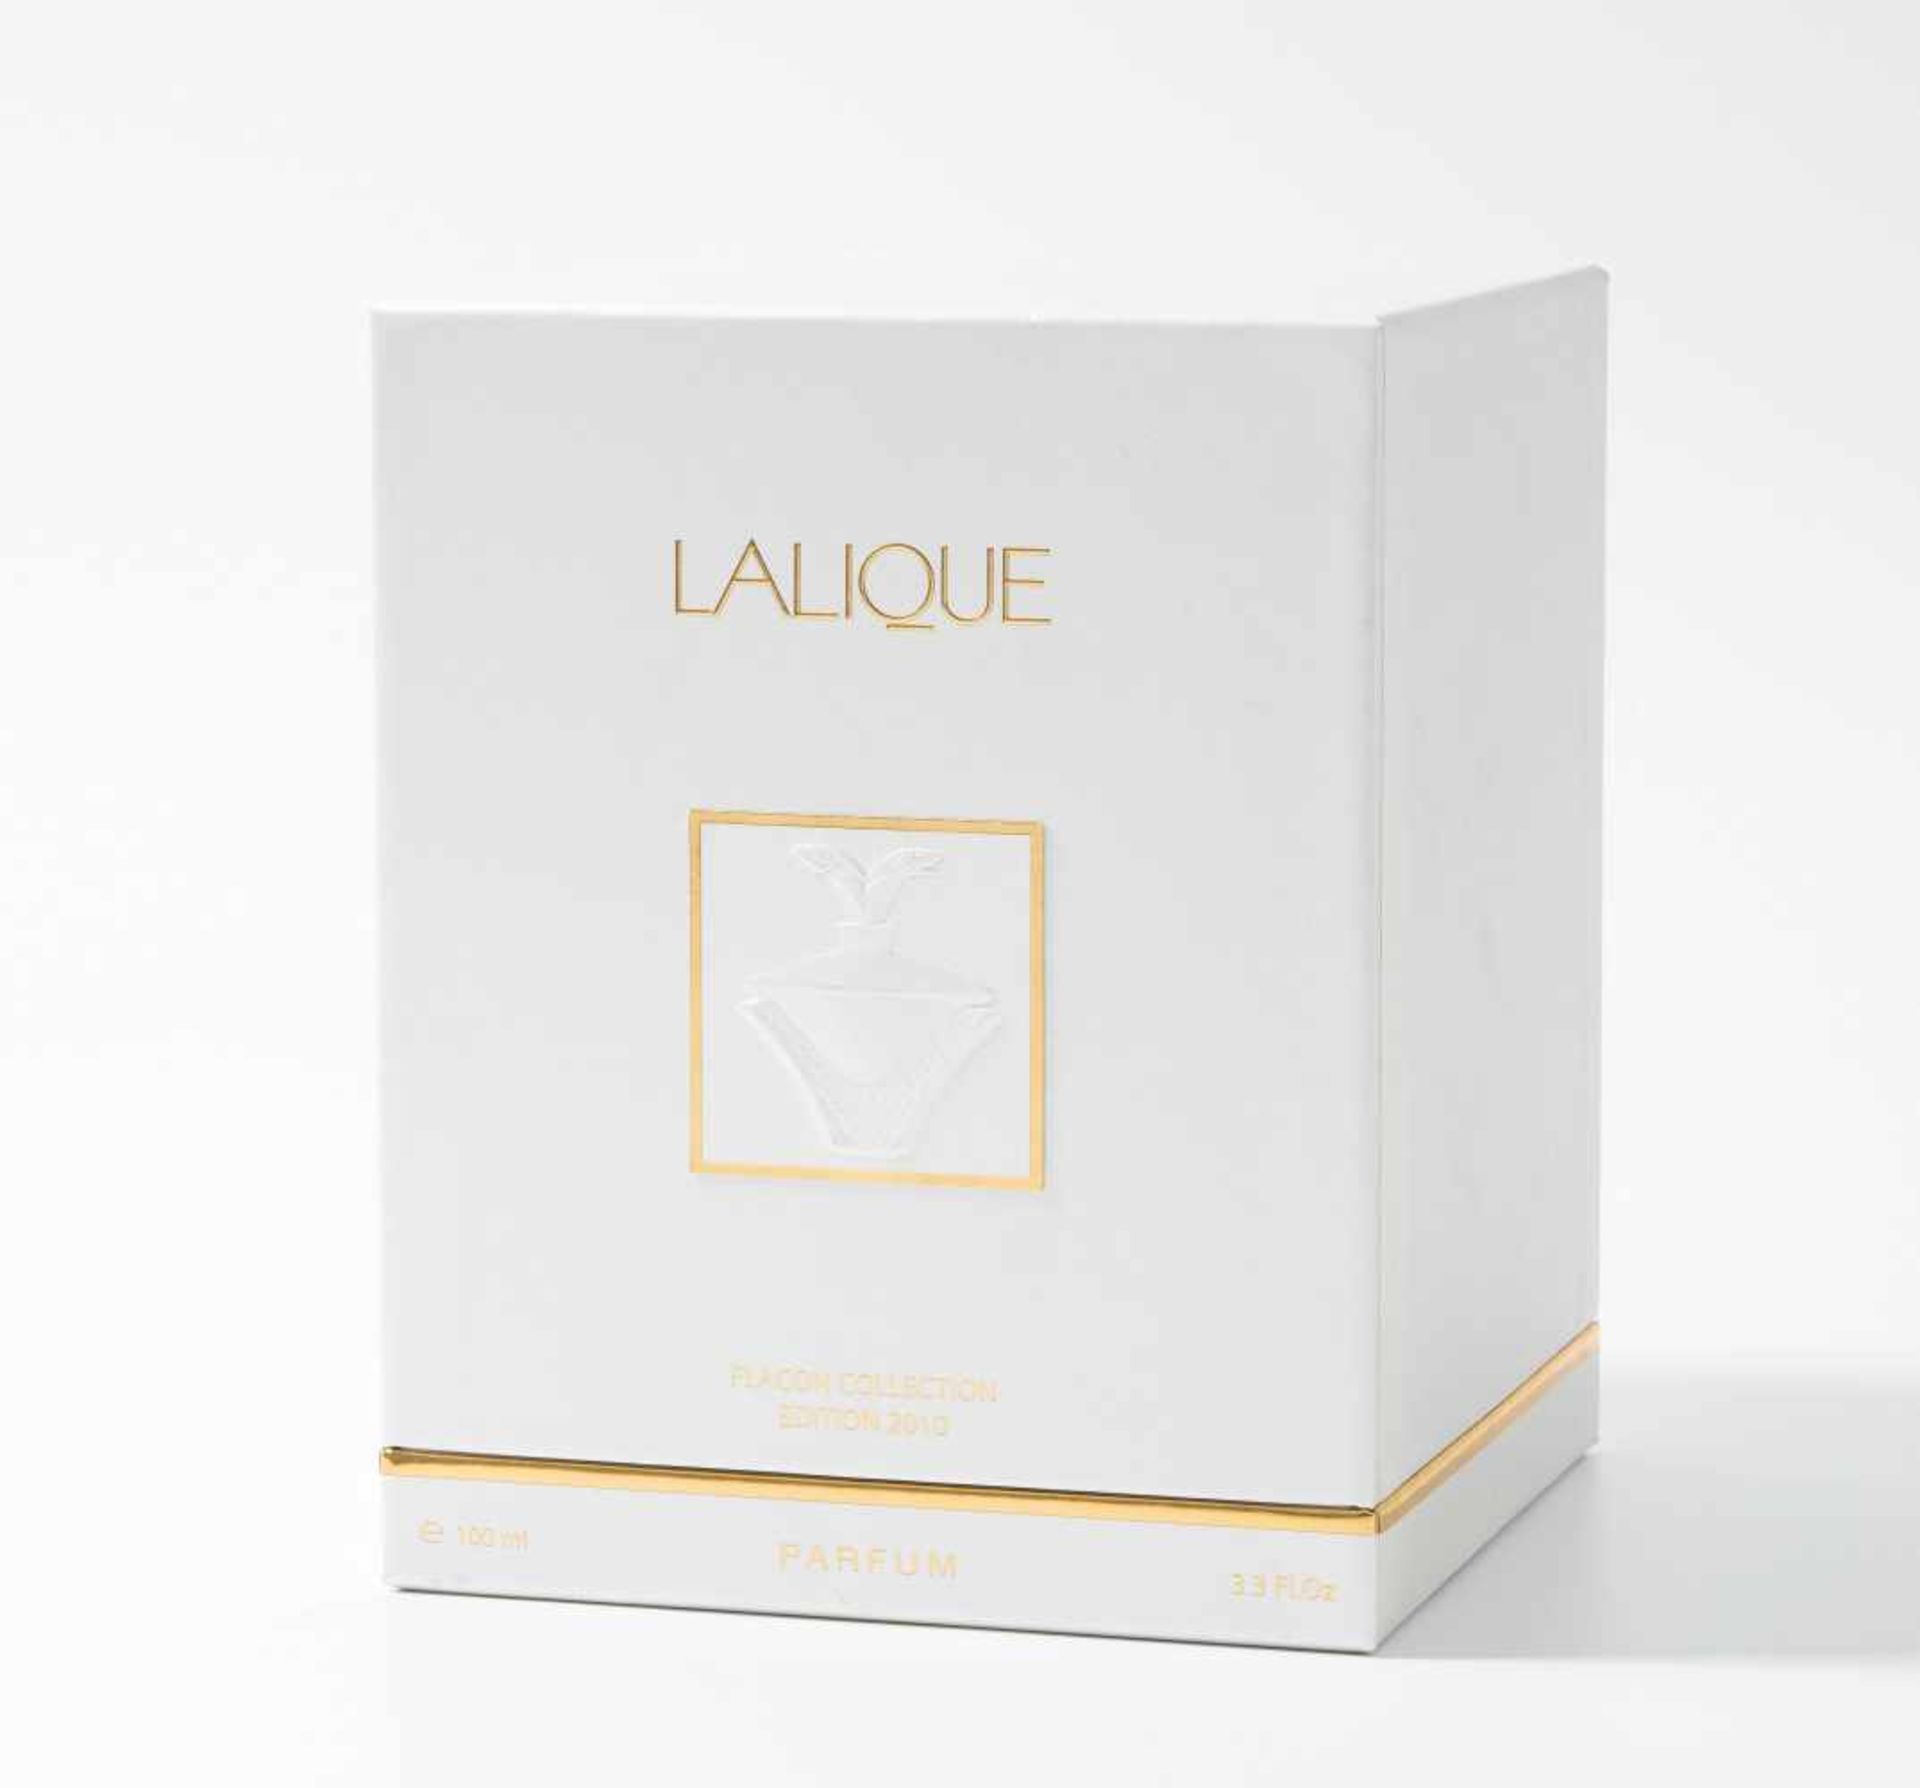 Lalique FranceParfum "Cascade". Flacon Collection Edition 2010, limitierte Auflage. Farbloses - Bild 3 aus 3